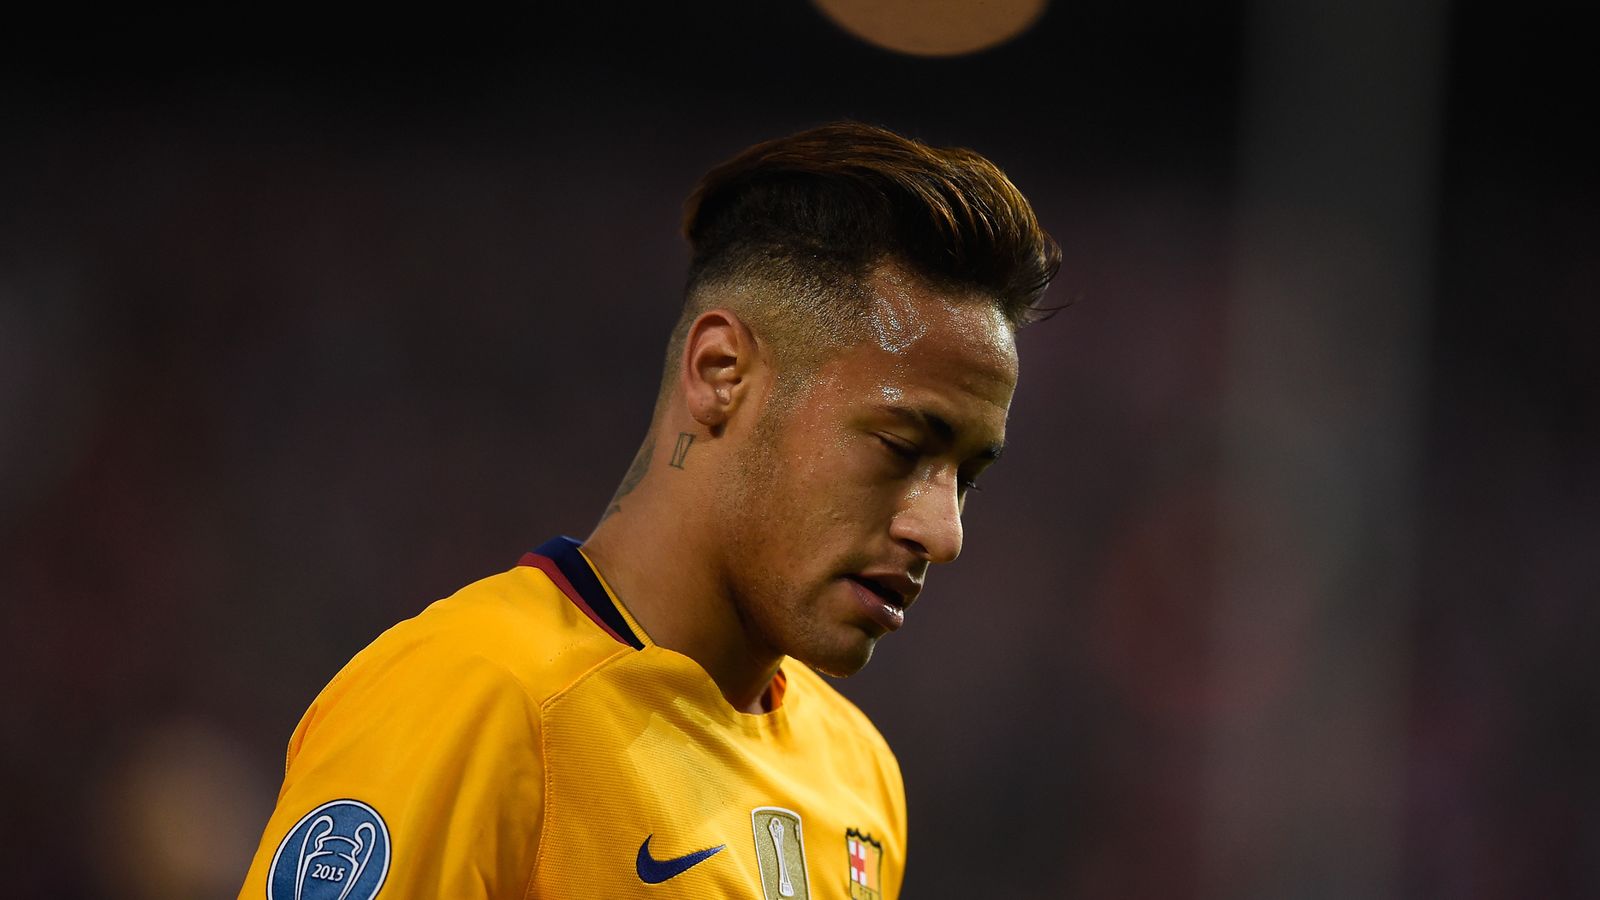 Neymar new hairstyle Fc Barcelona vs Las Palmas - 26.9.2015 - YouTube